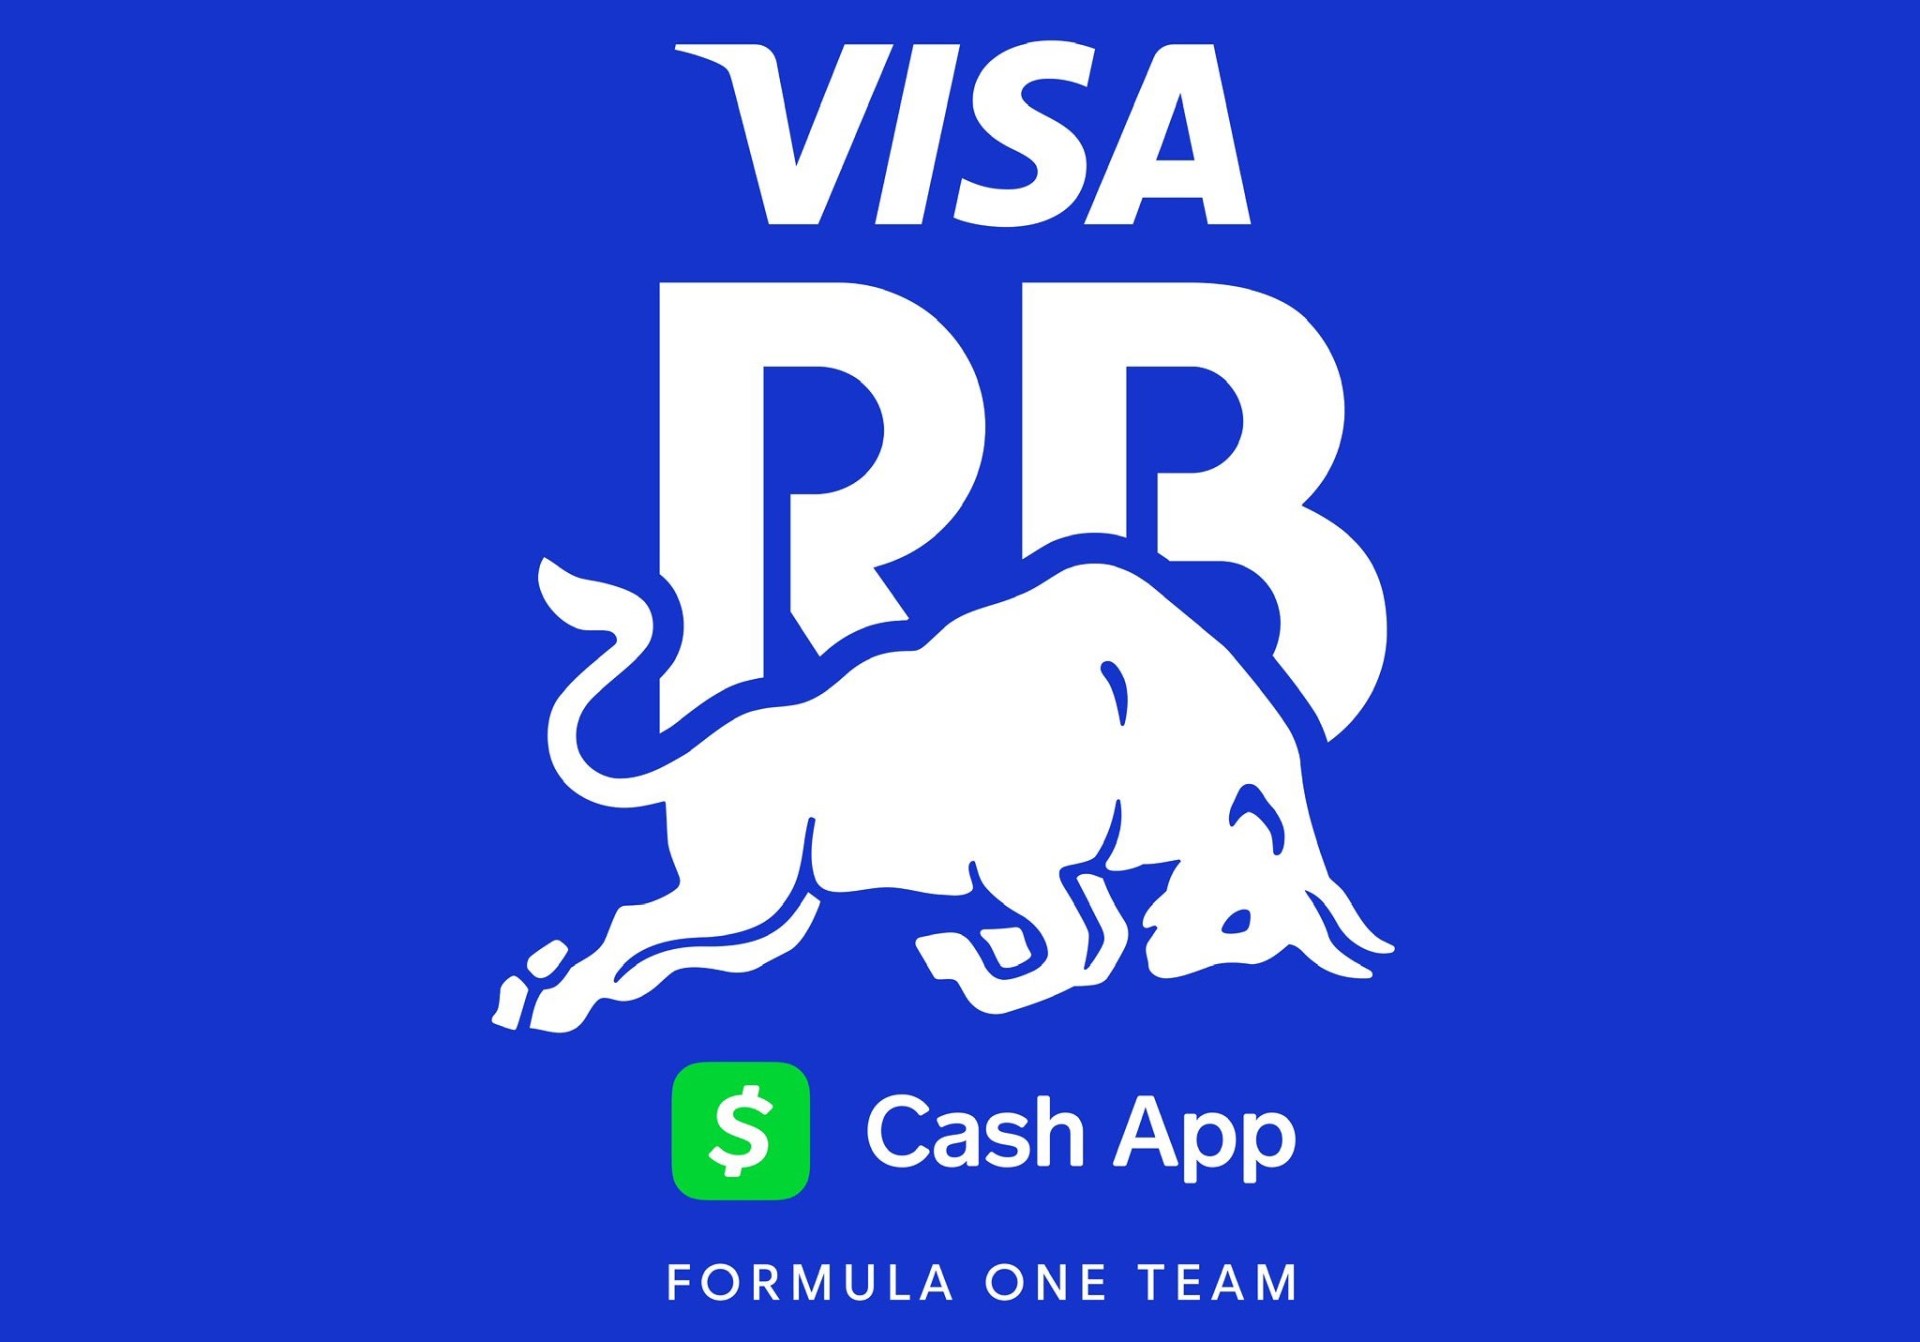 'diabolical!' - fans mock f1 team after they change name to visa cash app rb